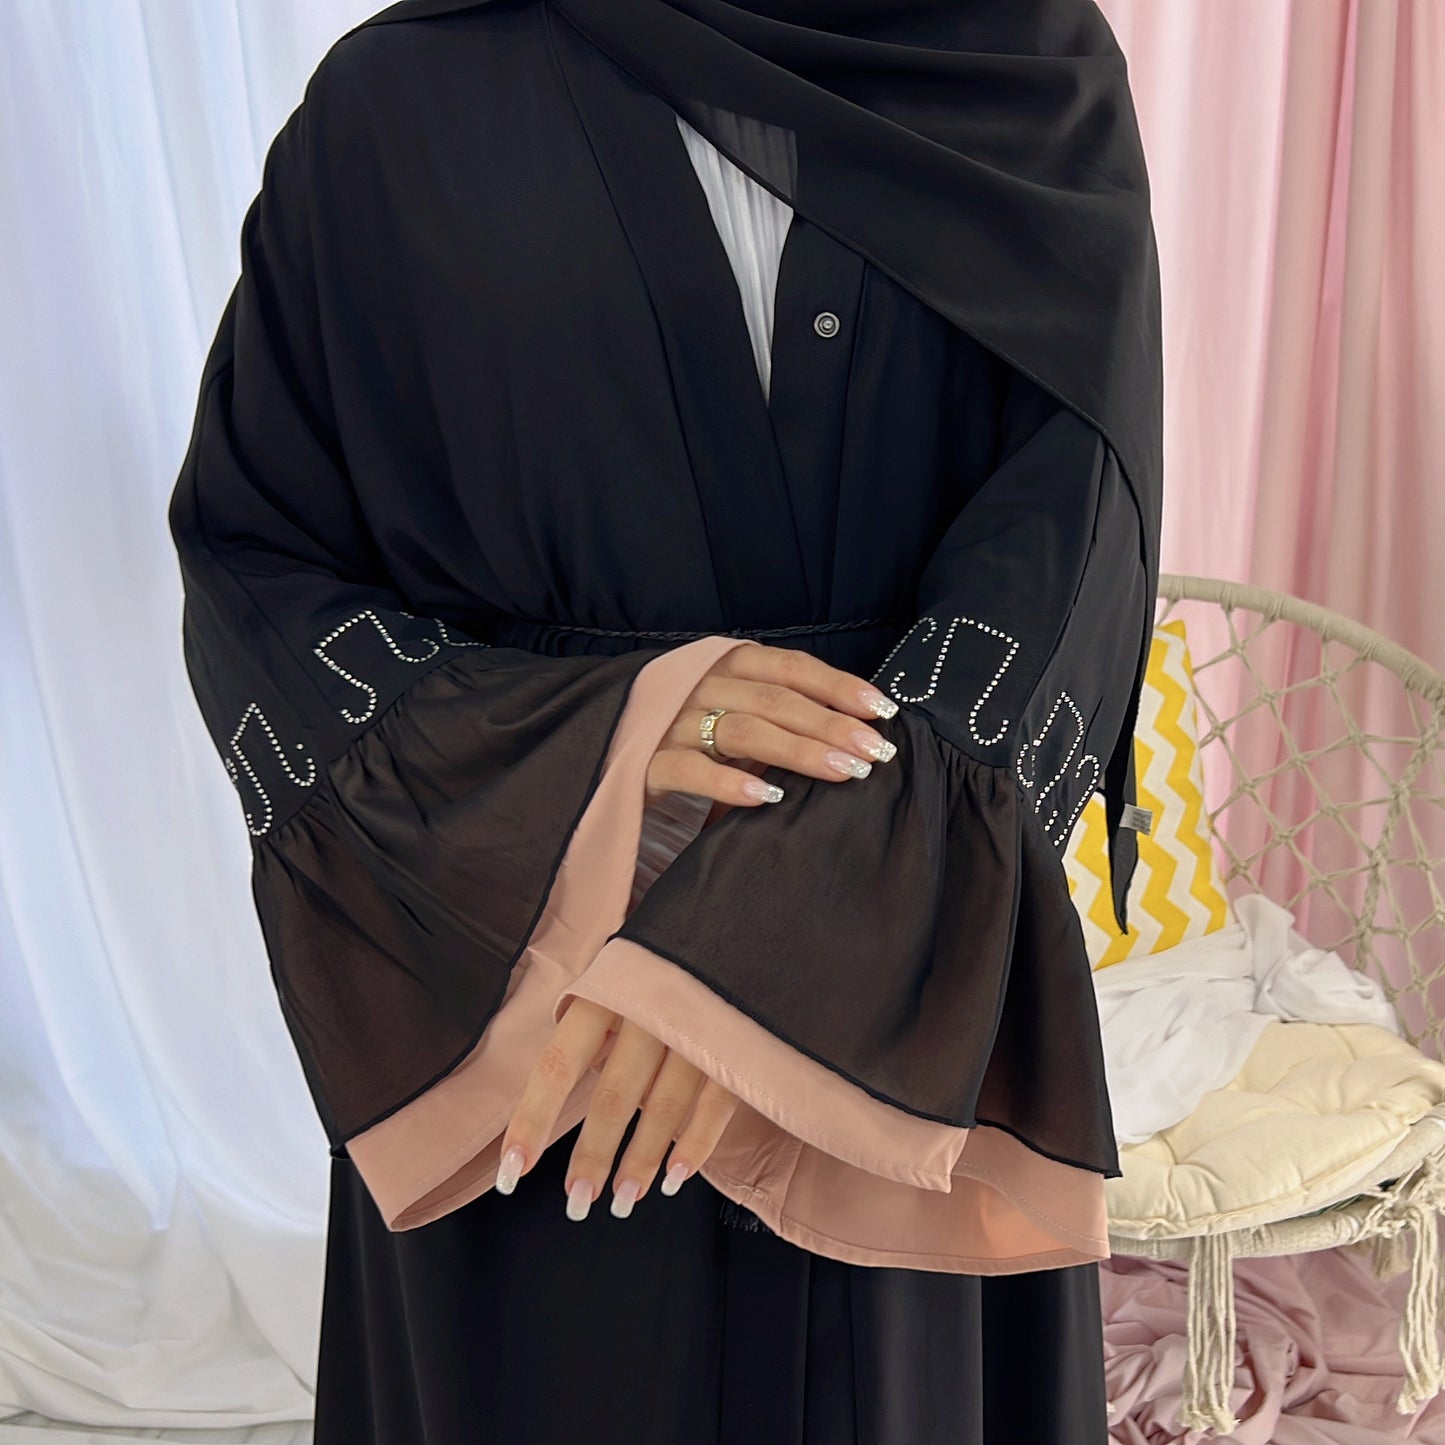 Lace Patchwork Black Abaya Dress